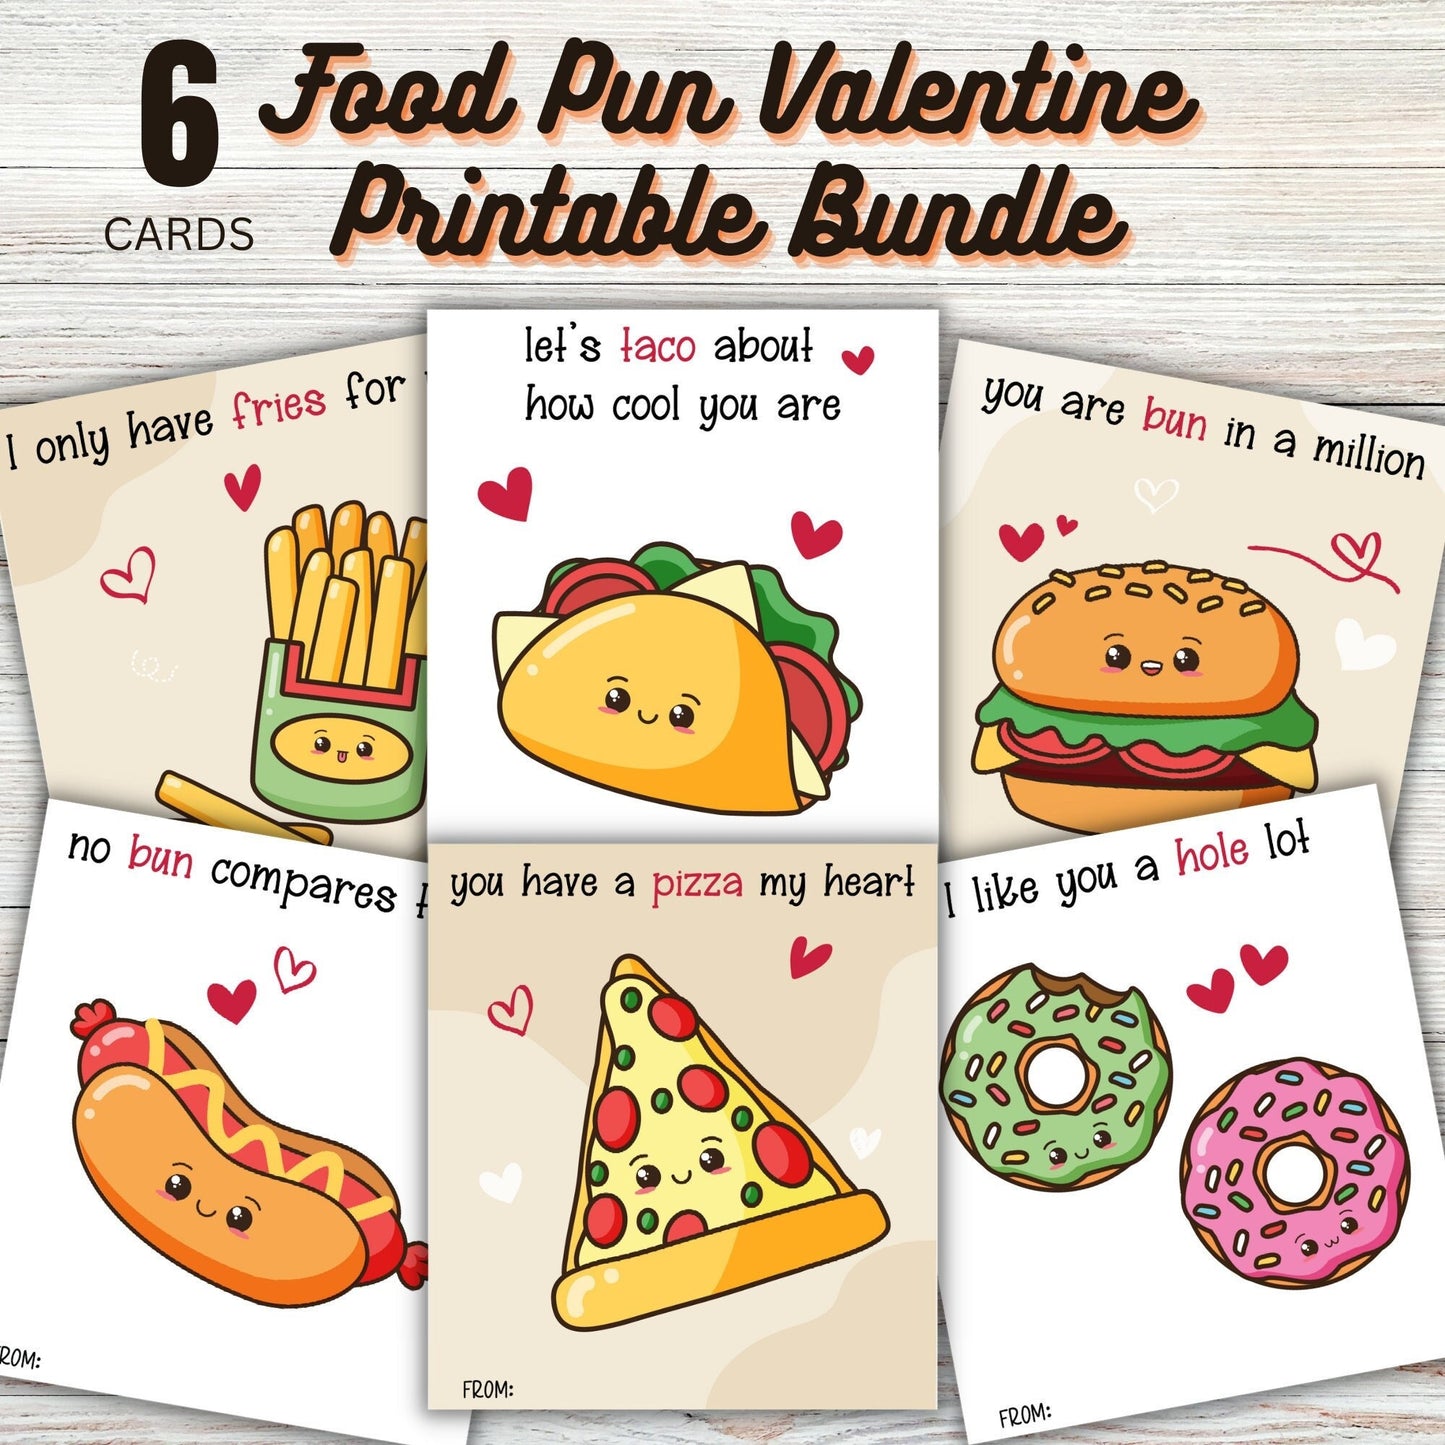 Food Pun Valentine Printable Bundle - Valentines Day Printable Cards PDF - Instant Download